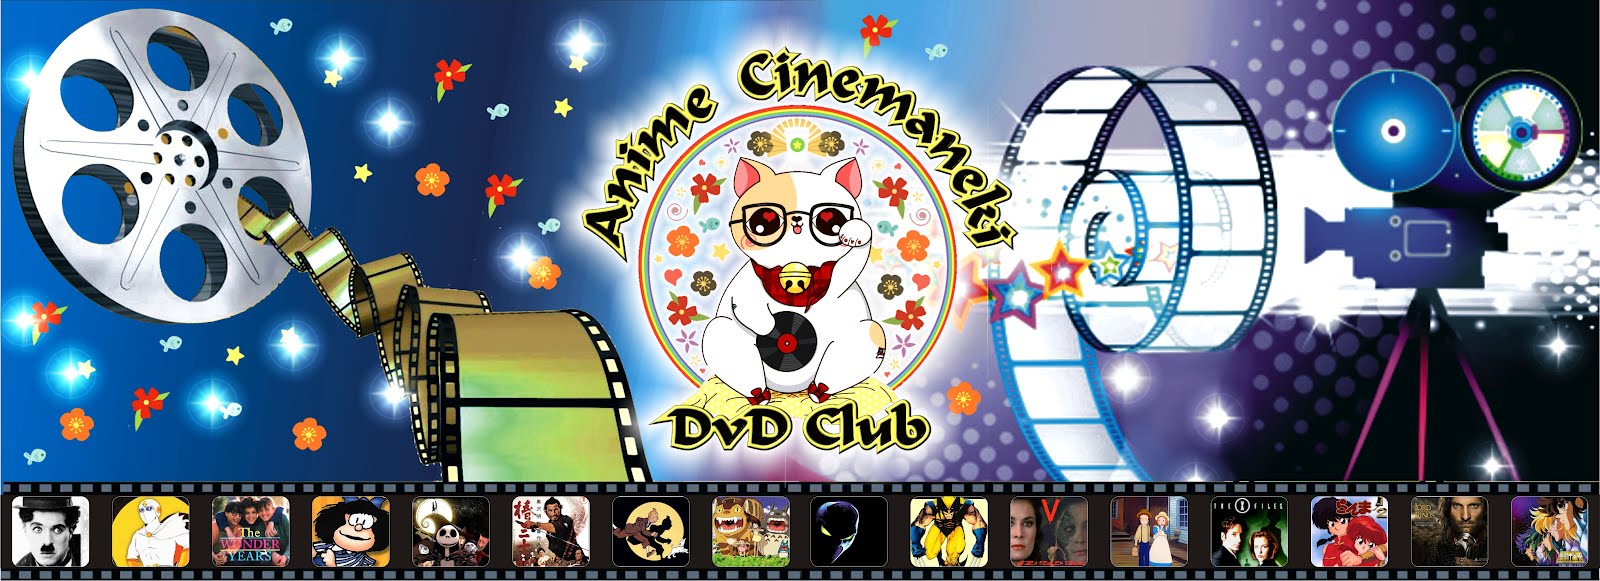 Animé Cinemaneki - DVD Club               "Películas - Series - Animación"